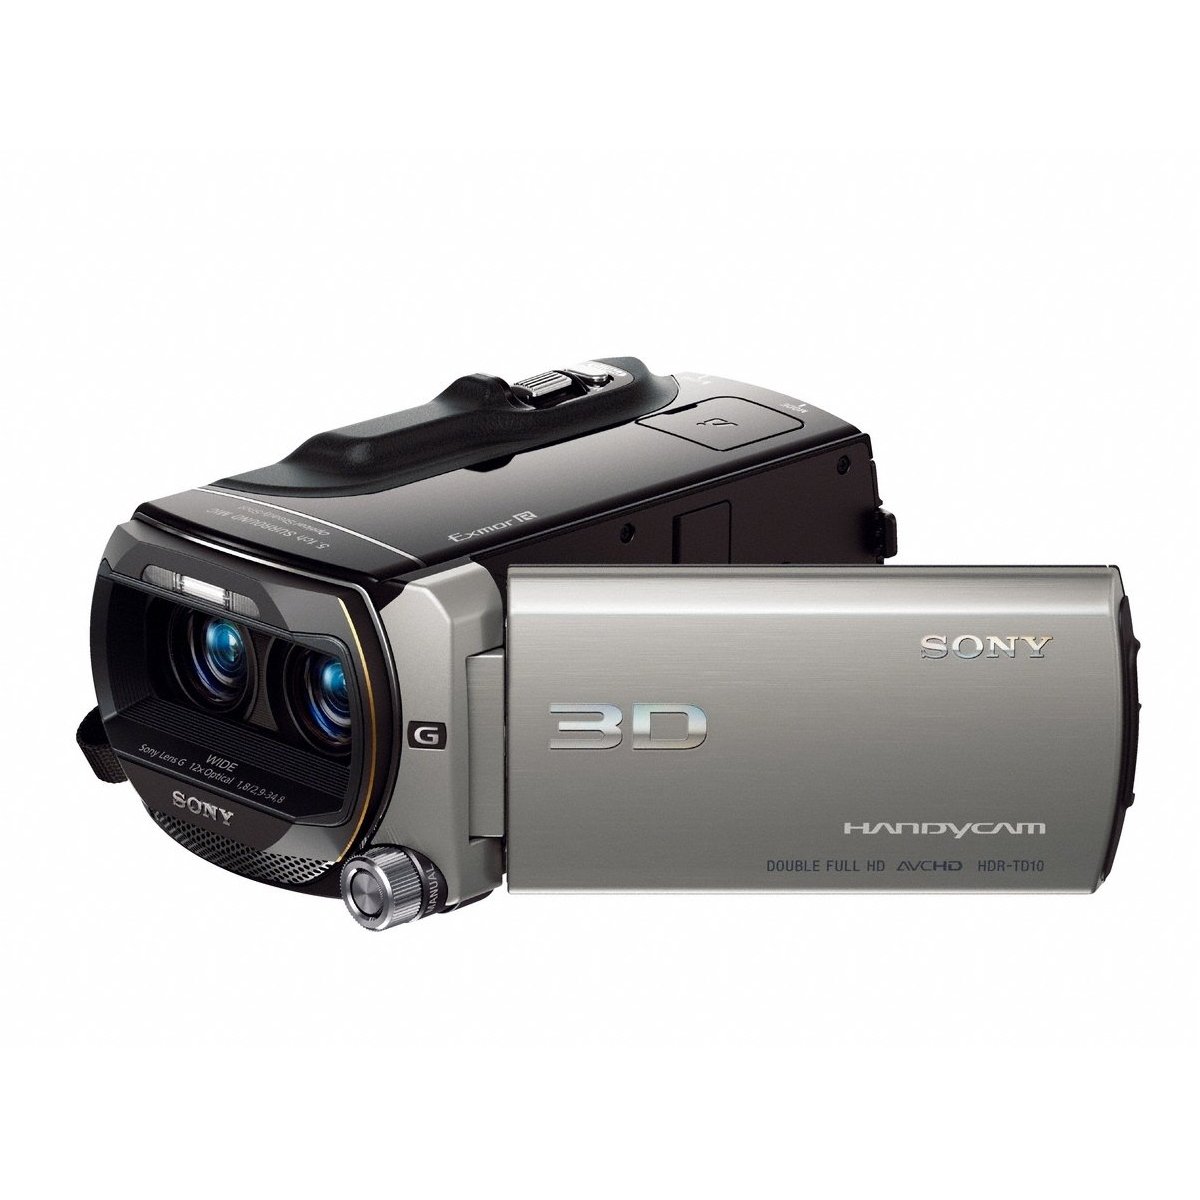 Sony HDR-TD10 High Definition 3D Handycam Camcorder